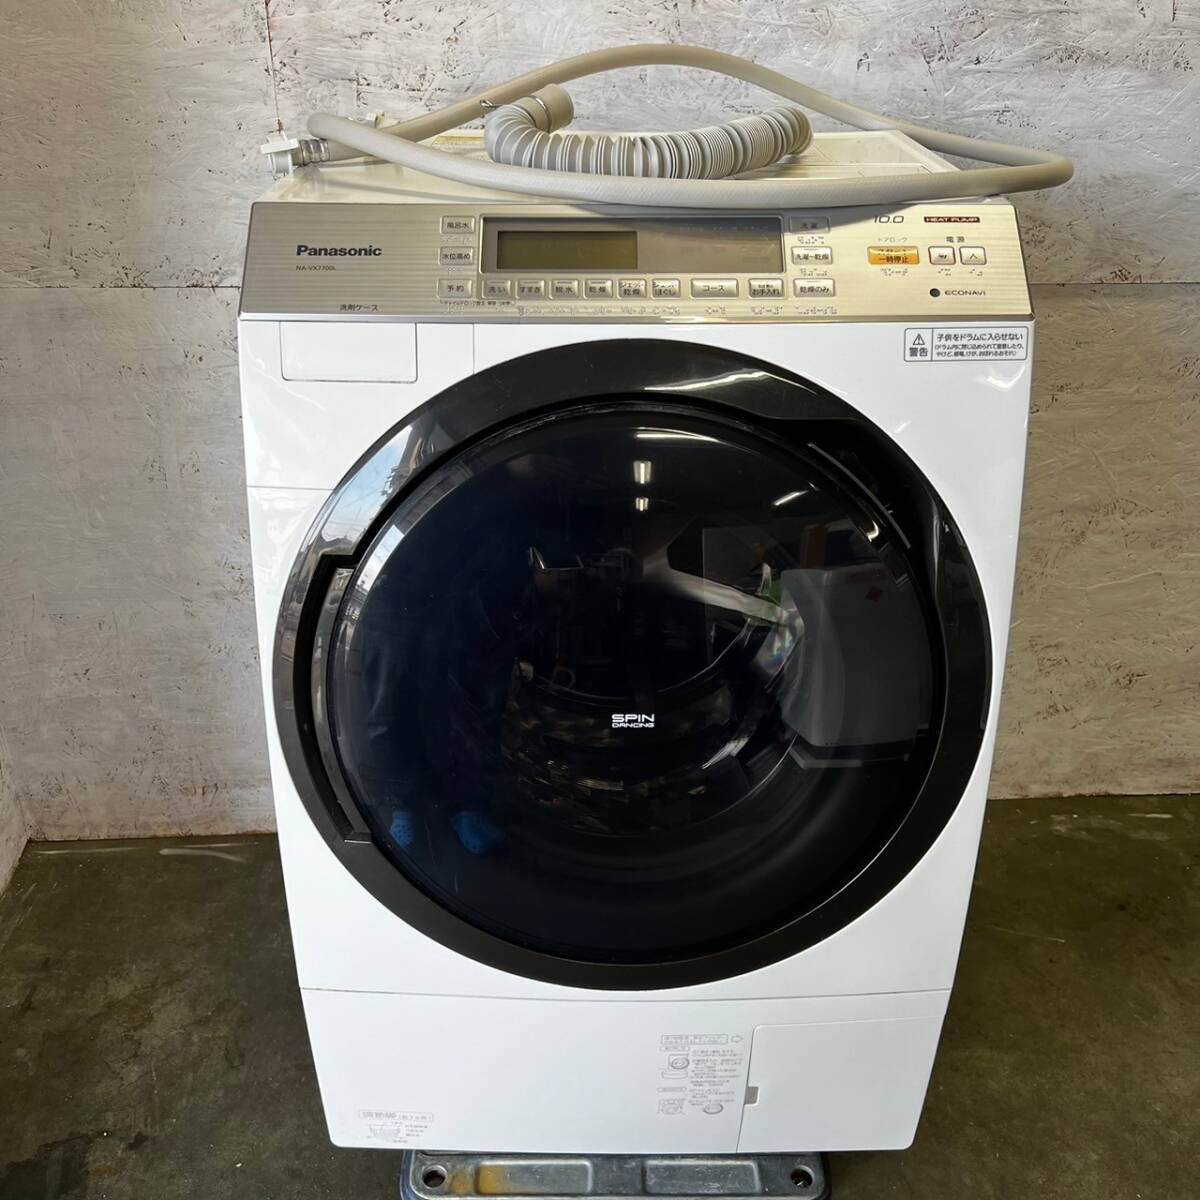 【Panasonic】 パナソニック ドラム式洗濯乾燥機 洗濯10kg 乾燥6kg NA-VX7700L 2017年製_画像1